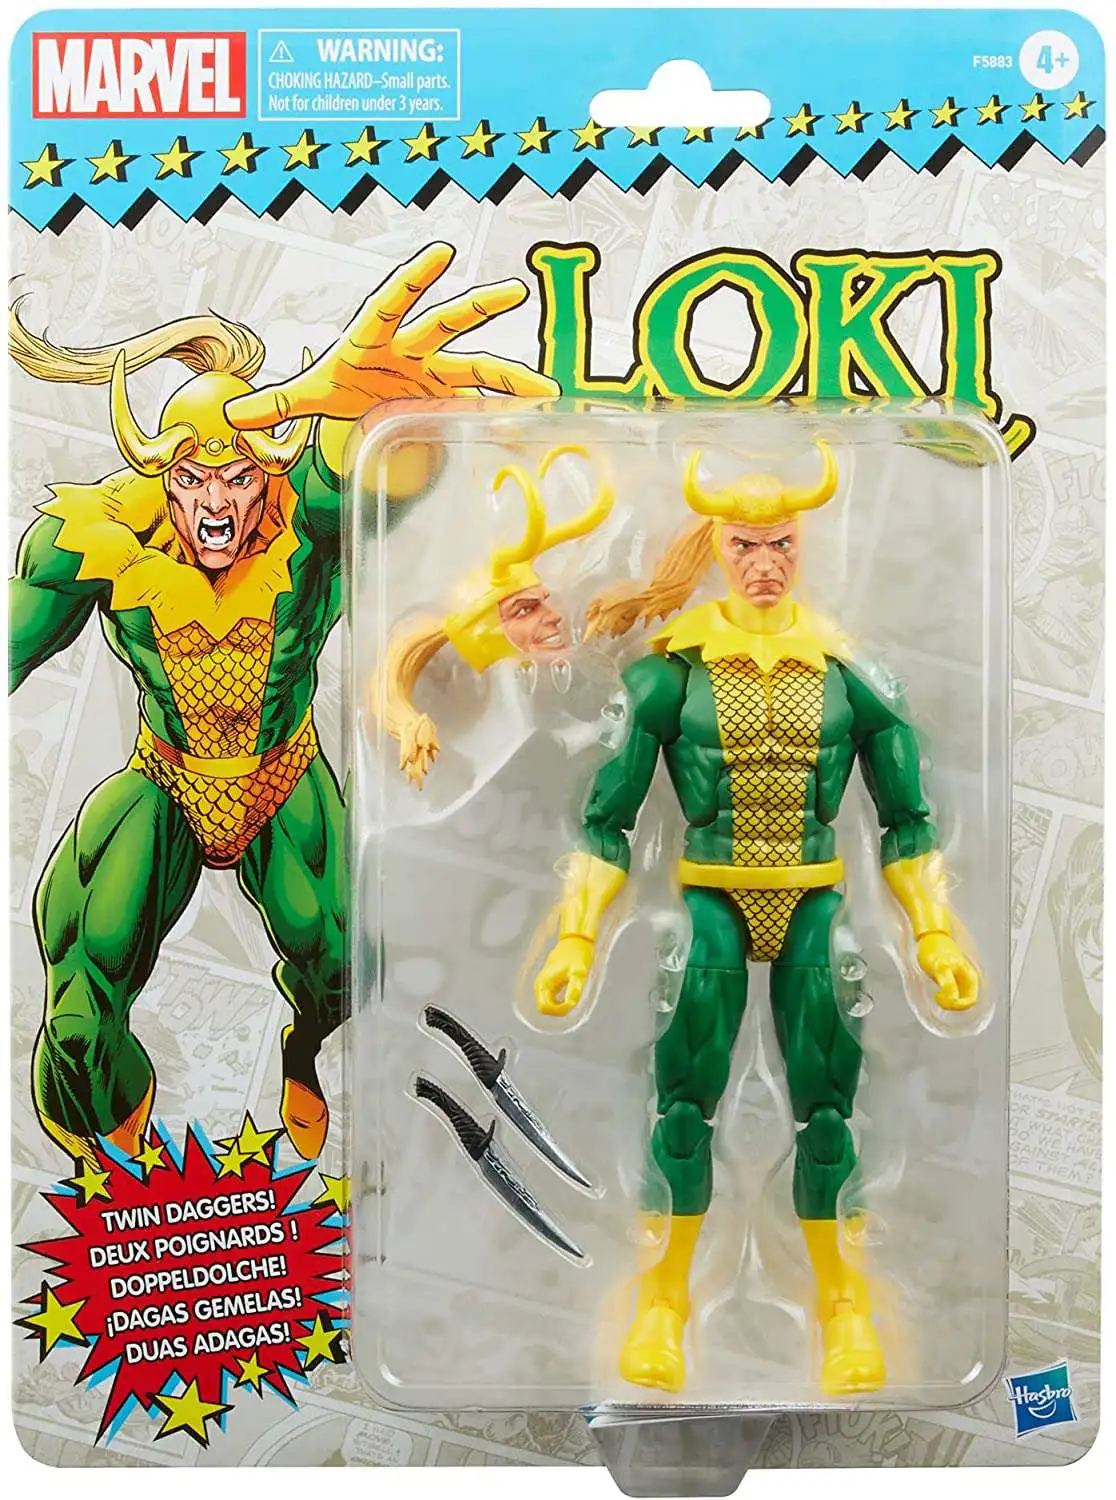 Marvel Avengers Comic Series Hulk Exclusive Action Figure Hasbro - ToyWiz